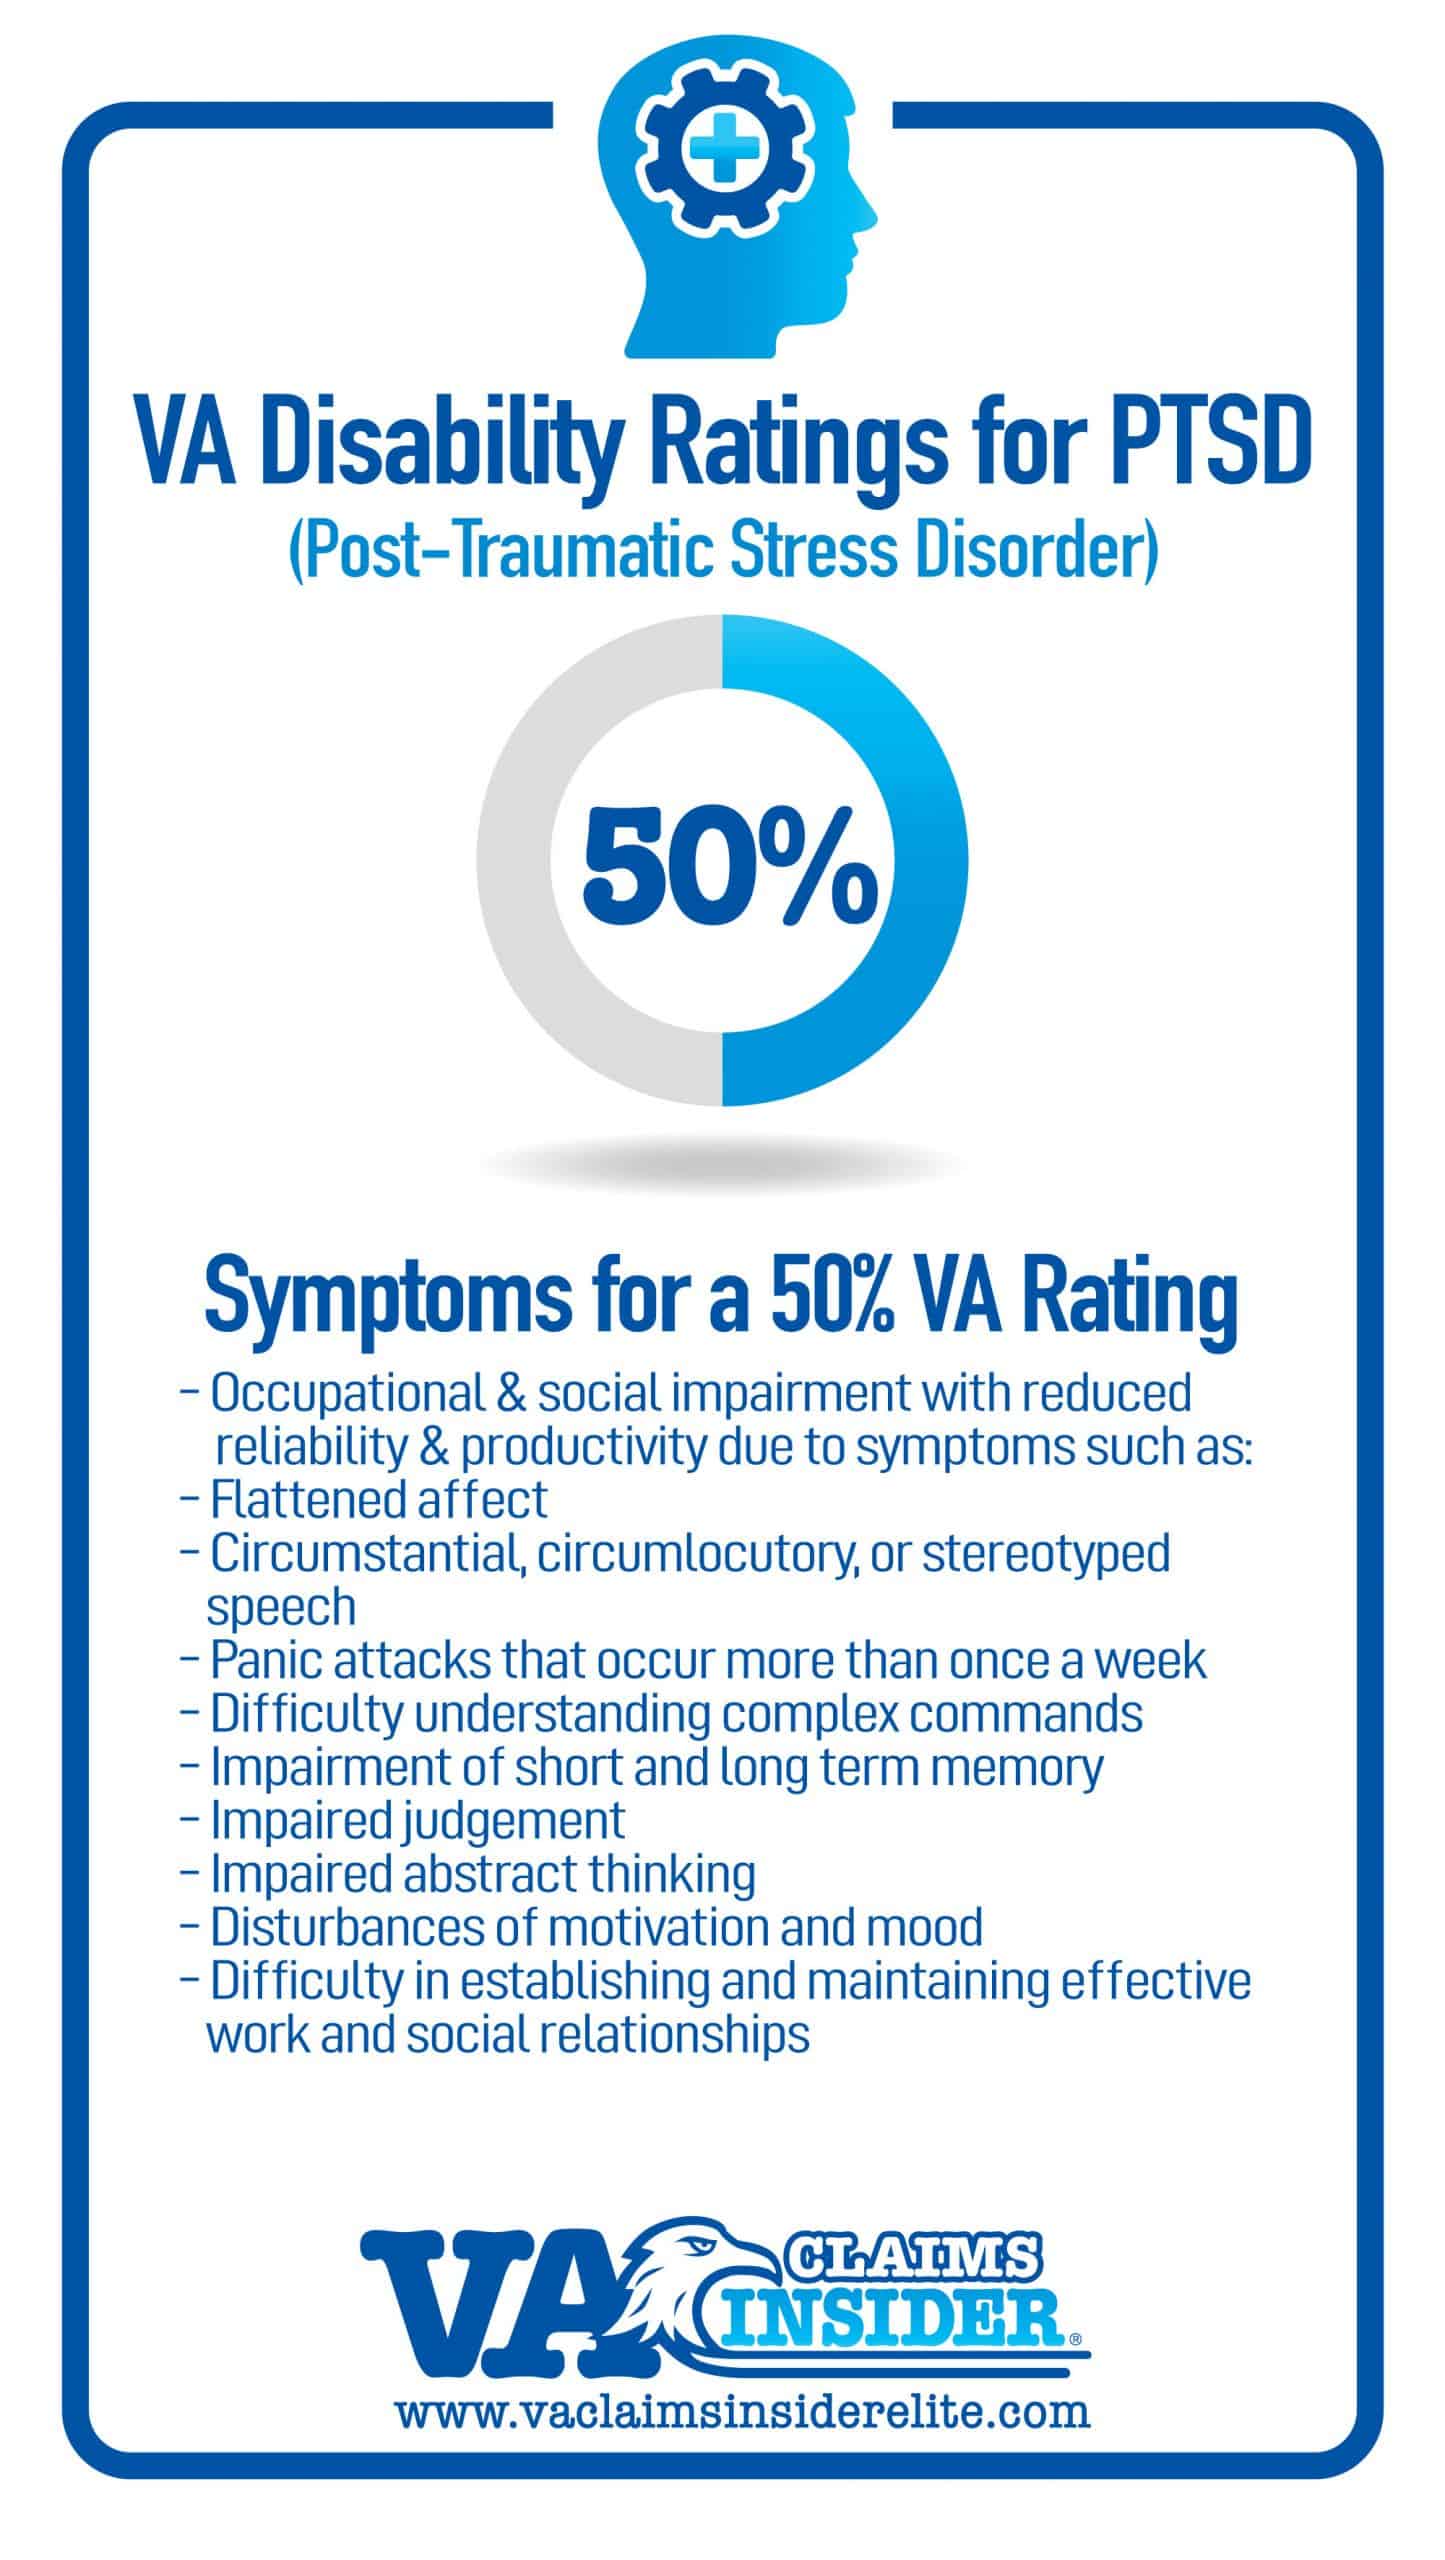 VA PTSD Rating Criteria Explained